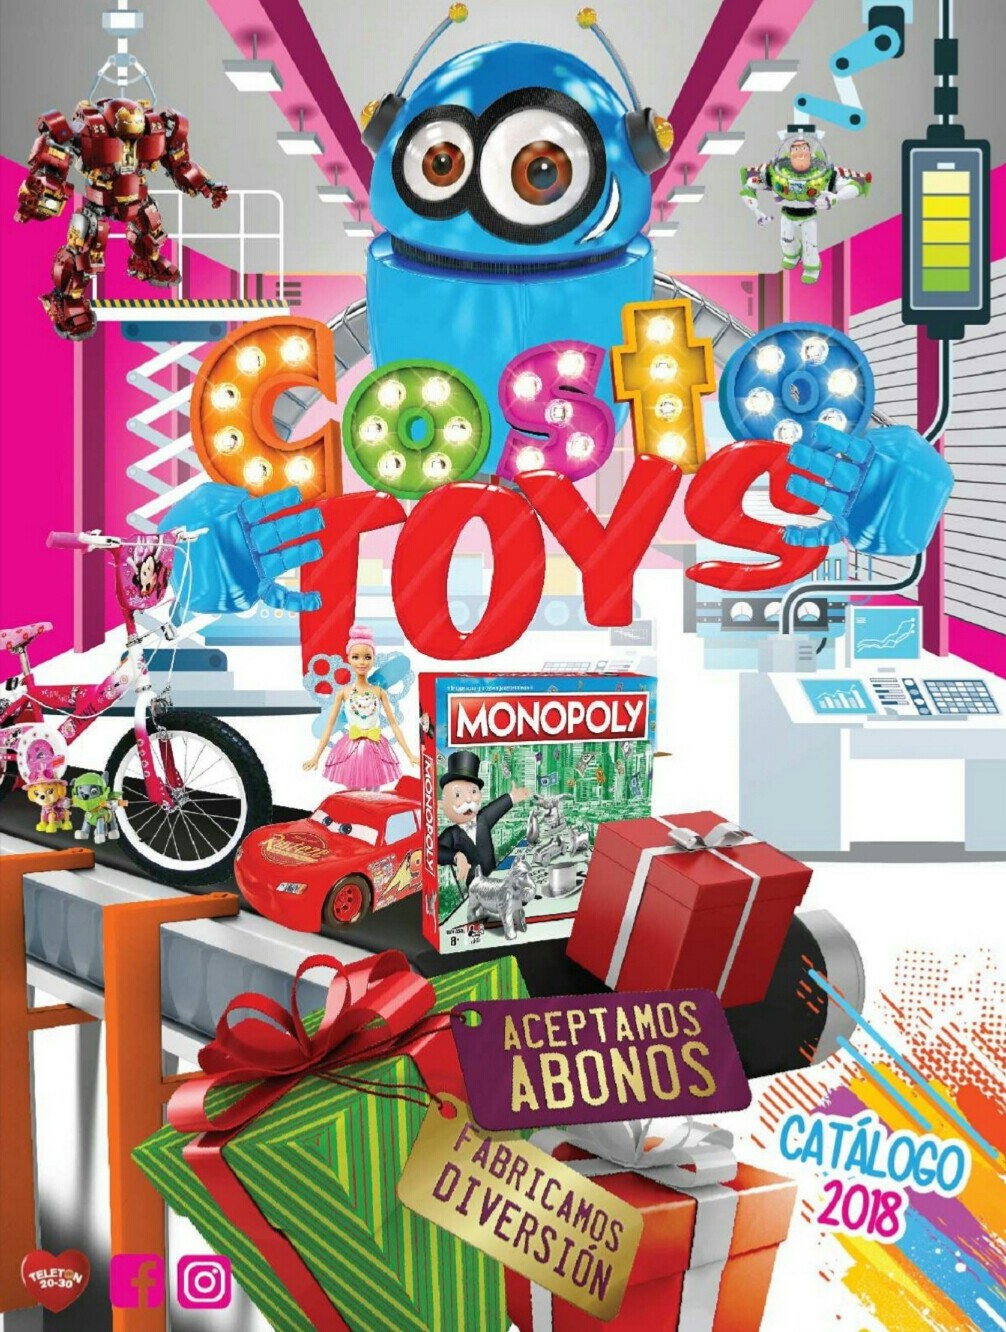 Catalogo de juguetes el Costo 2018 p